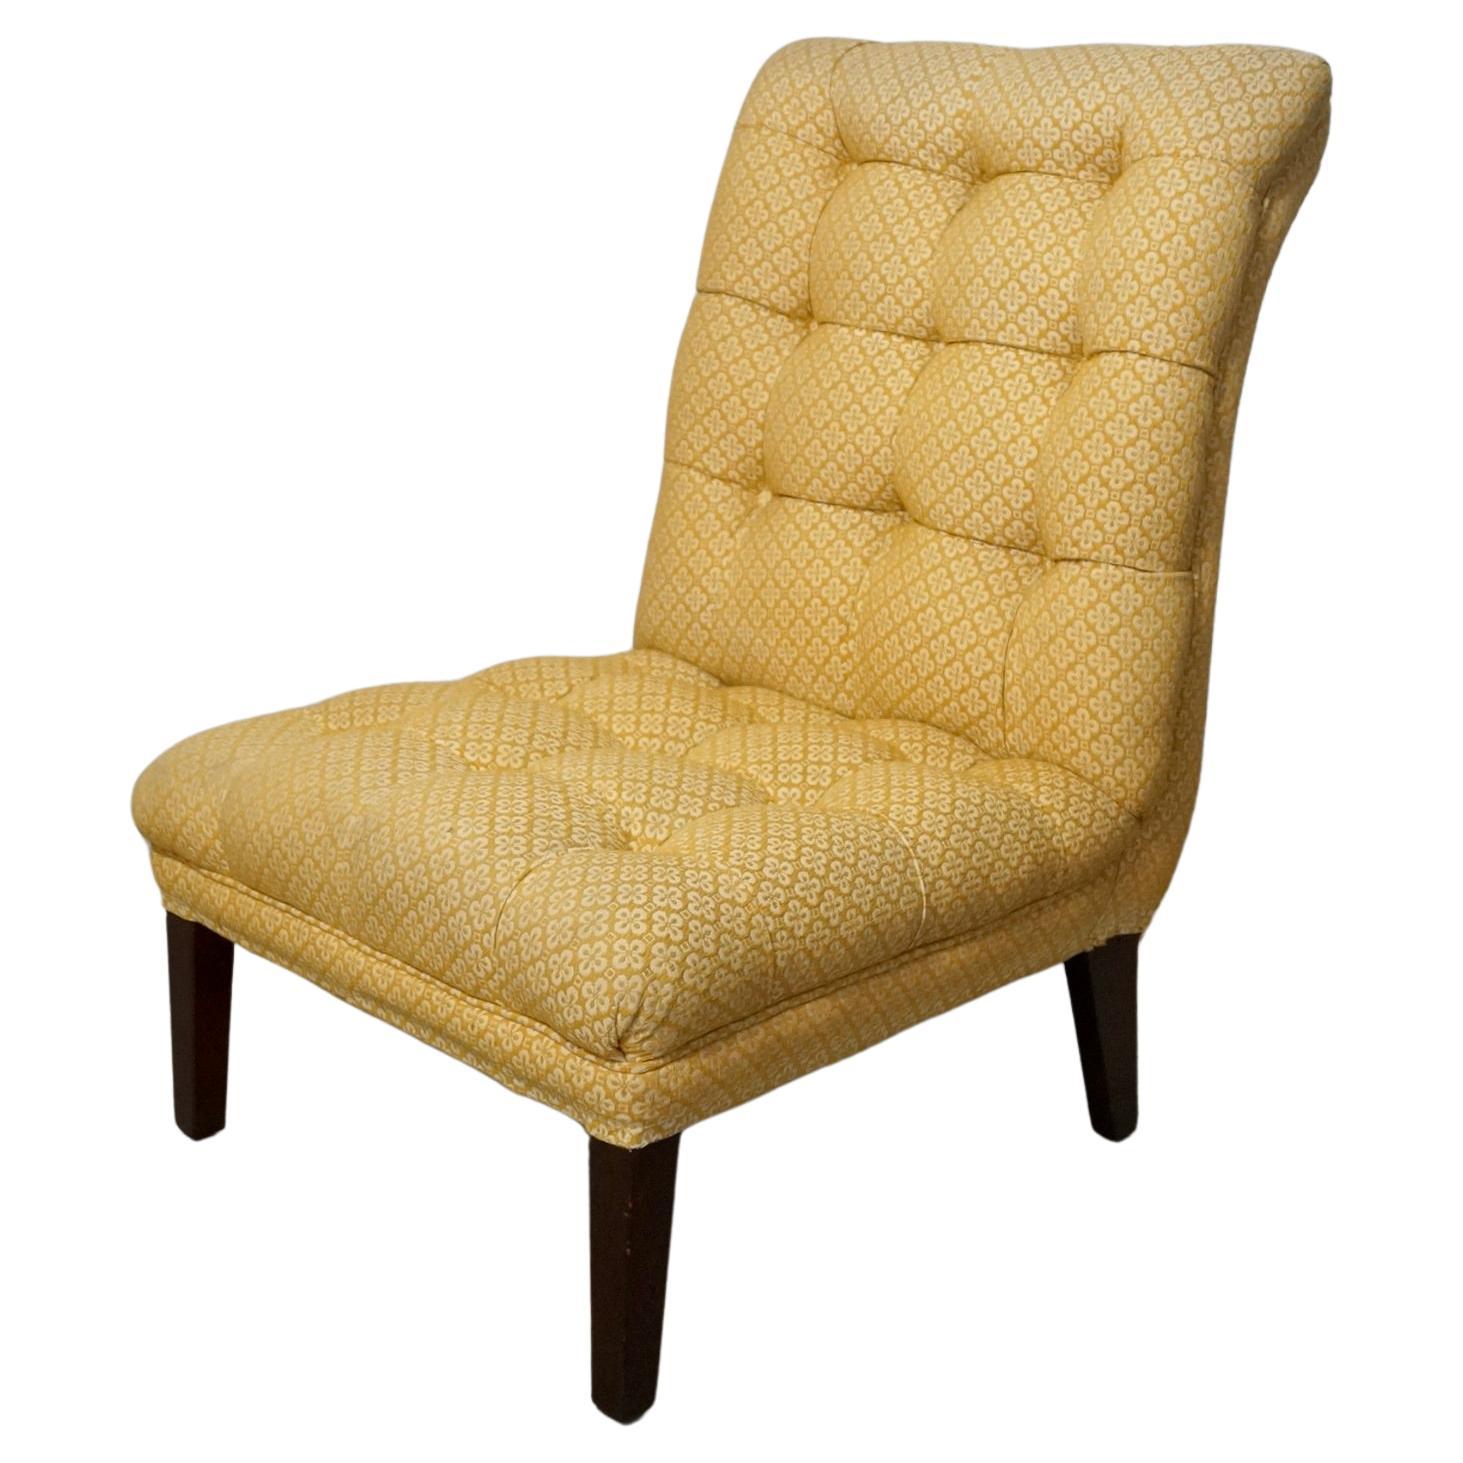 1960's Maison Jansen Style Scoop Slipper Lounge Chair